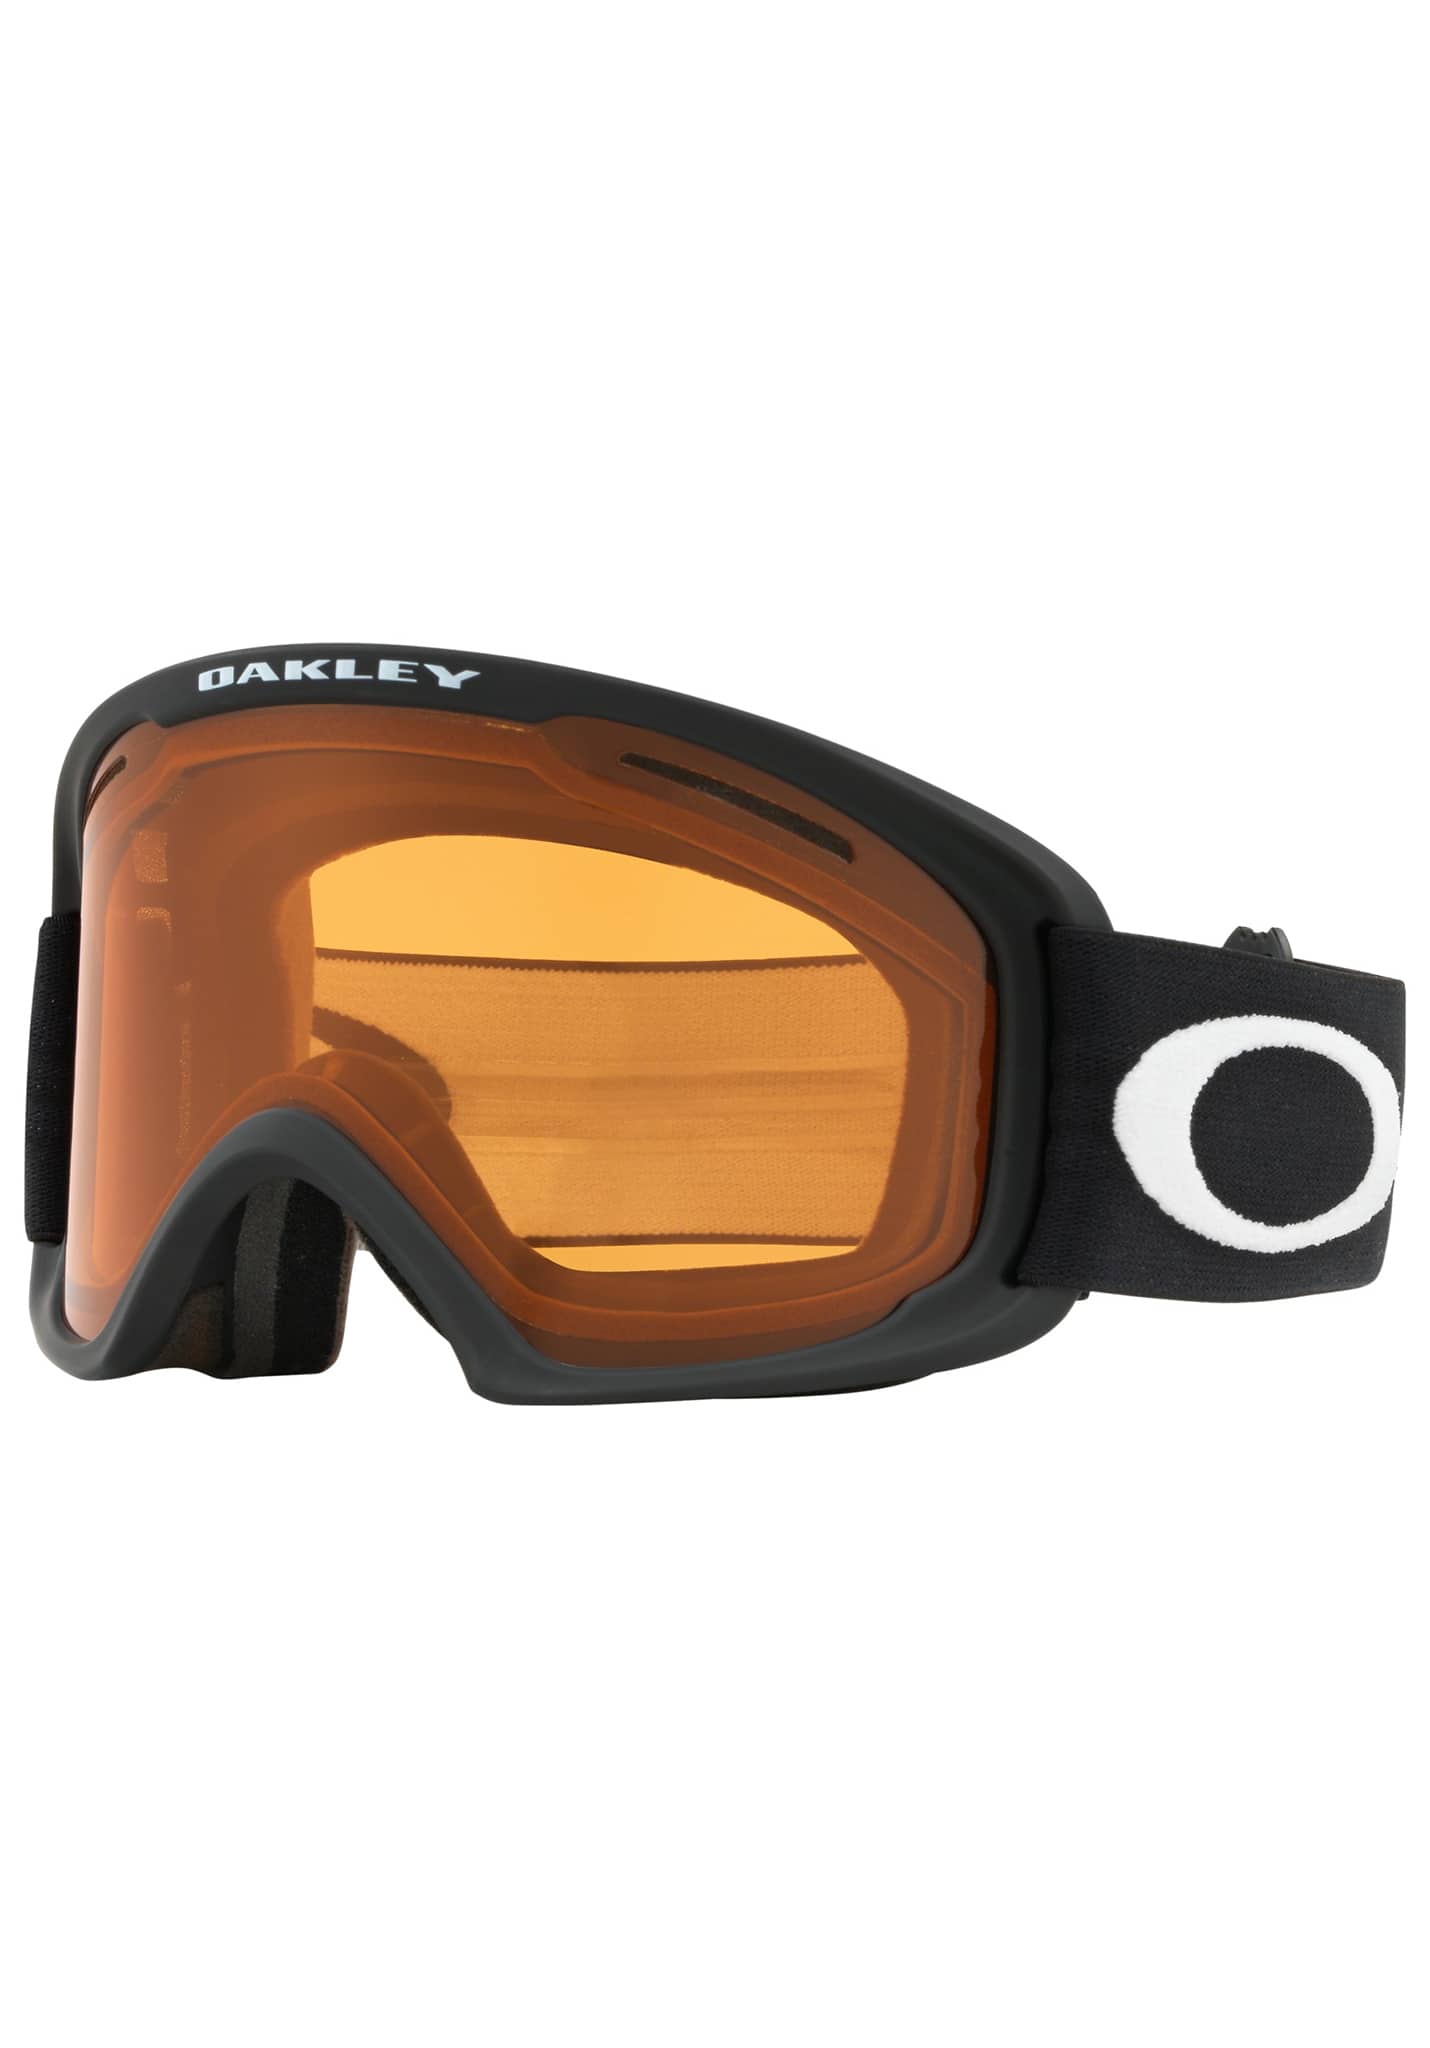 Oakley O Frame 2.0 Pro XL Snowboardbrillen mattschwarz/persimone & dunkelgrau One Size